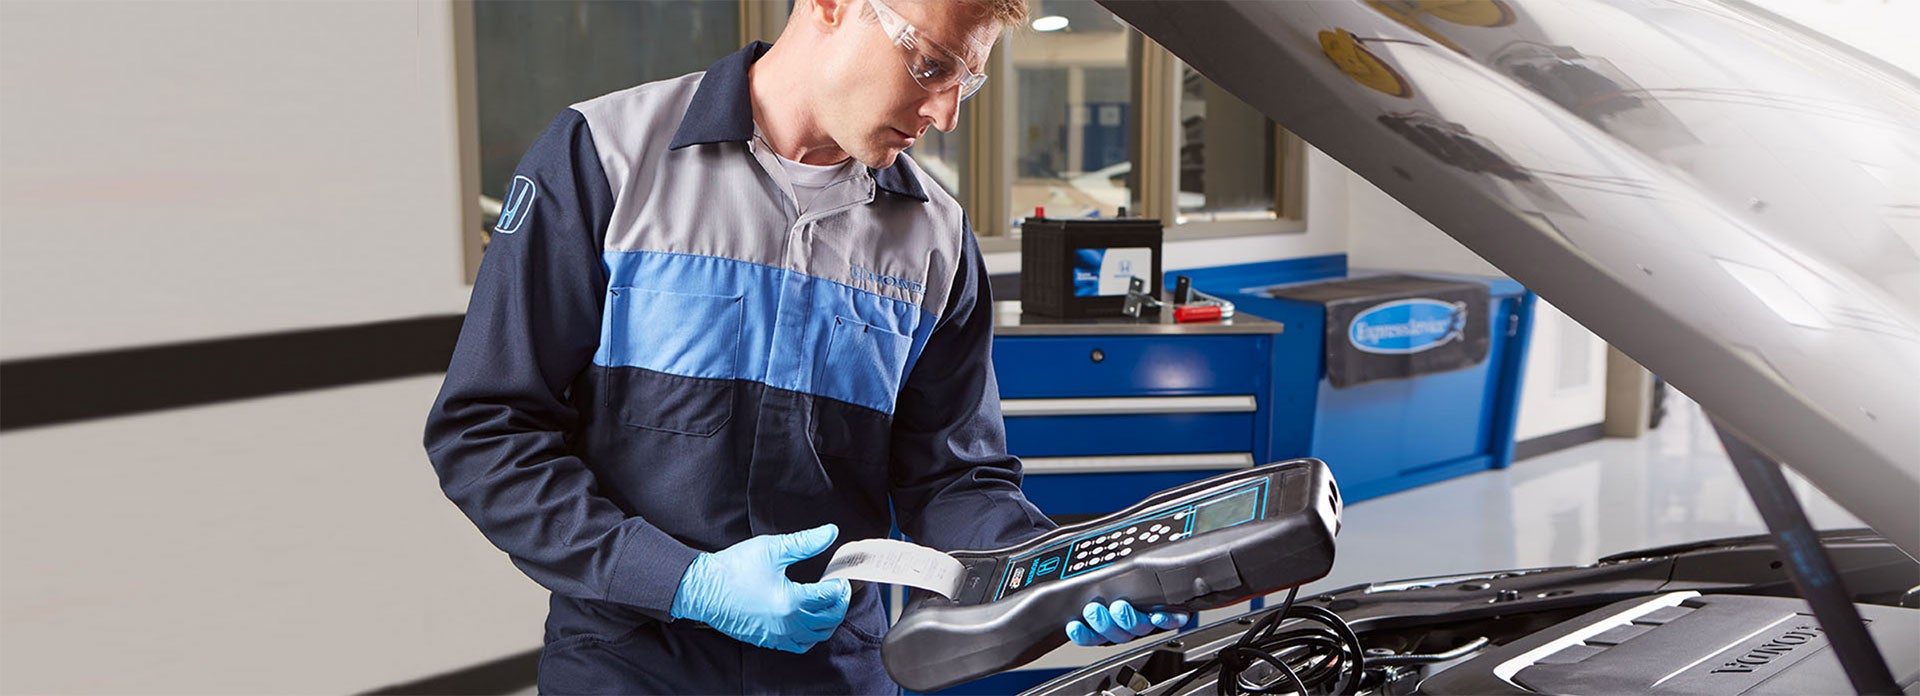 Honda Certified Service Technician performing check on Honda vehicle battery